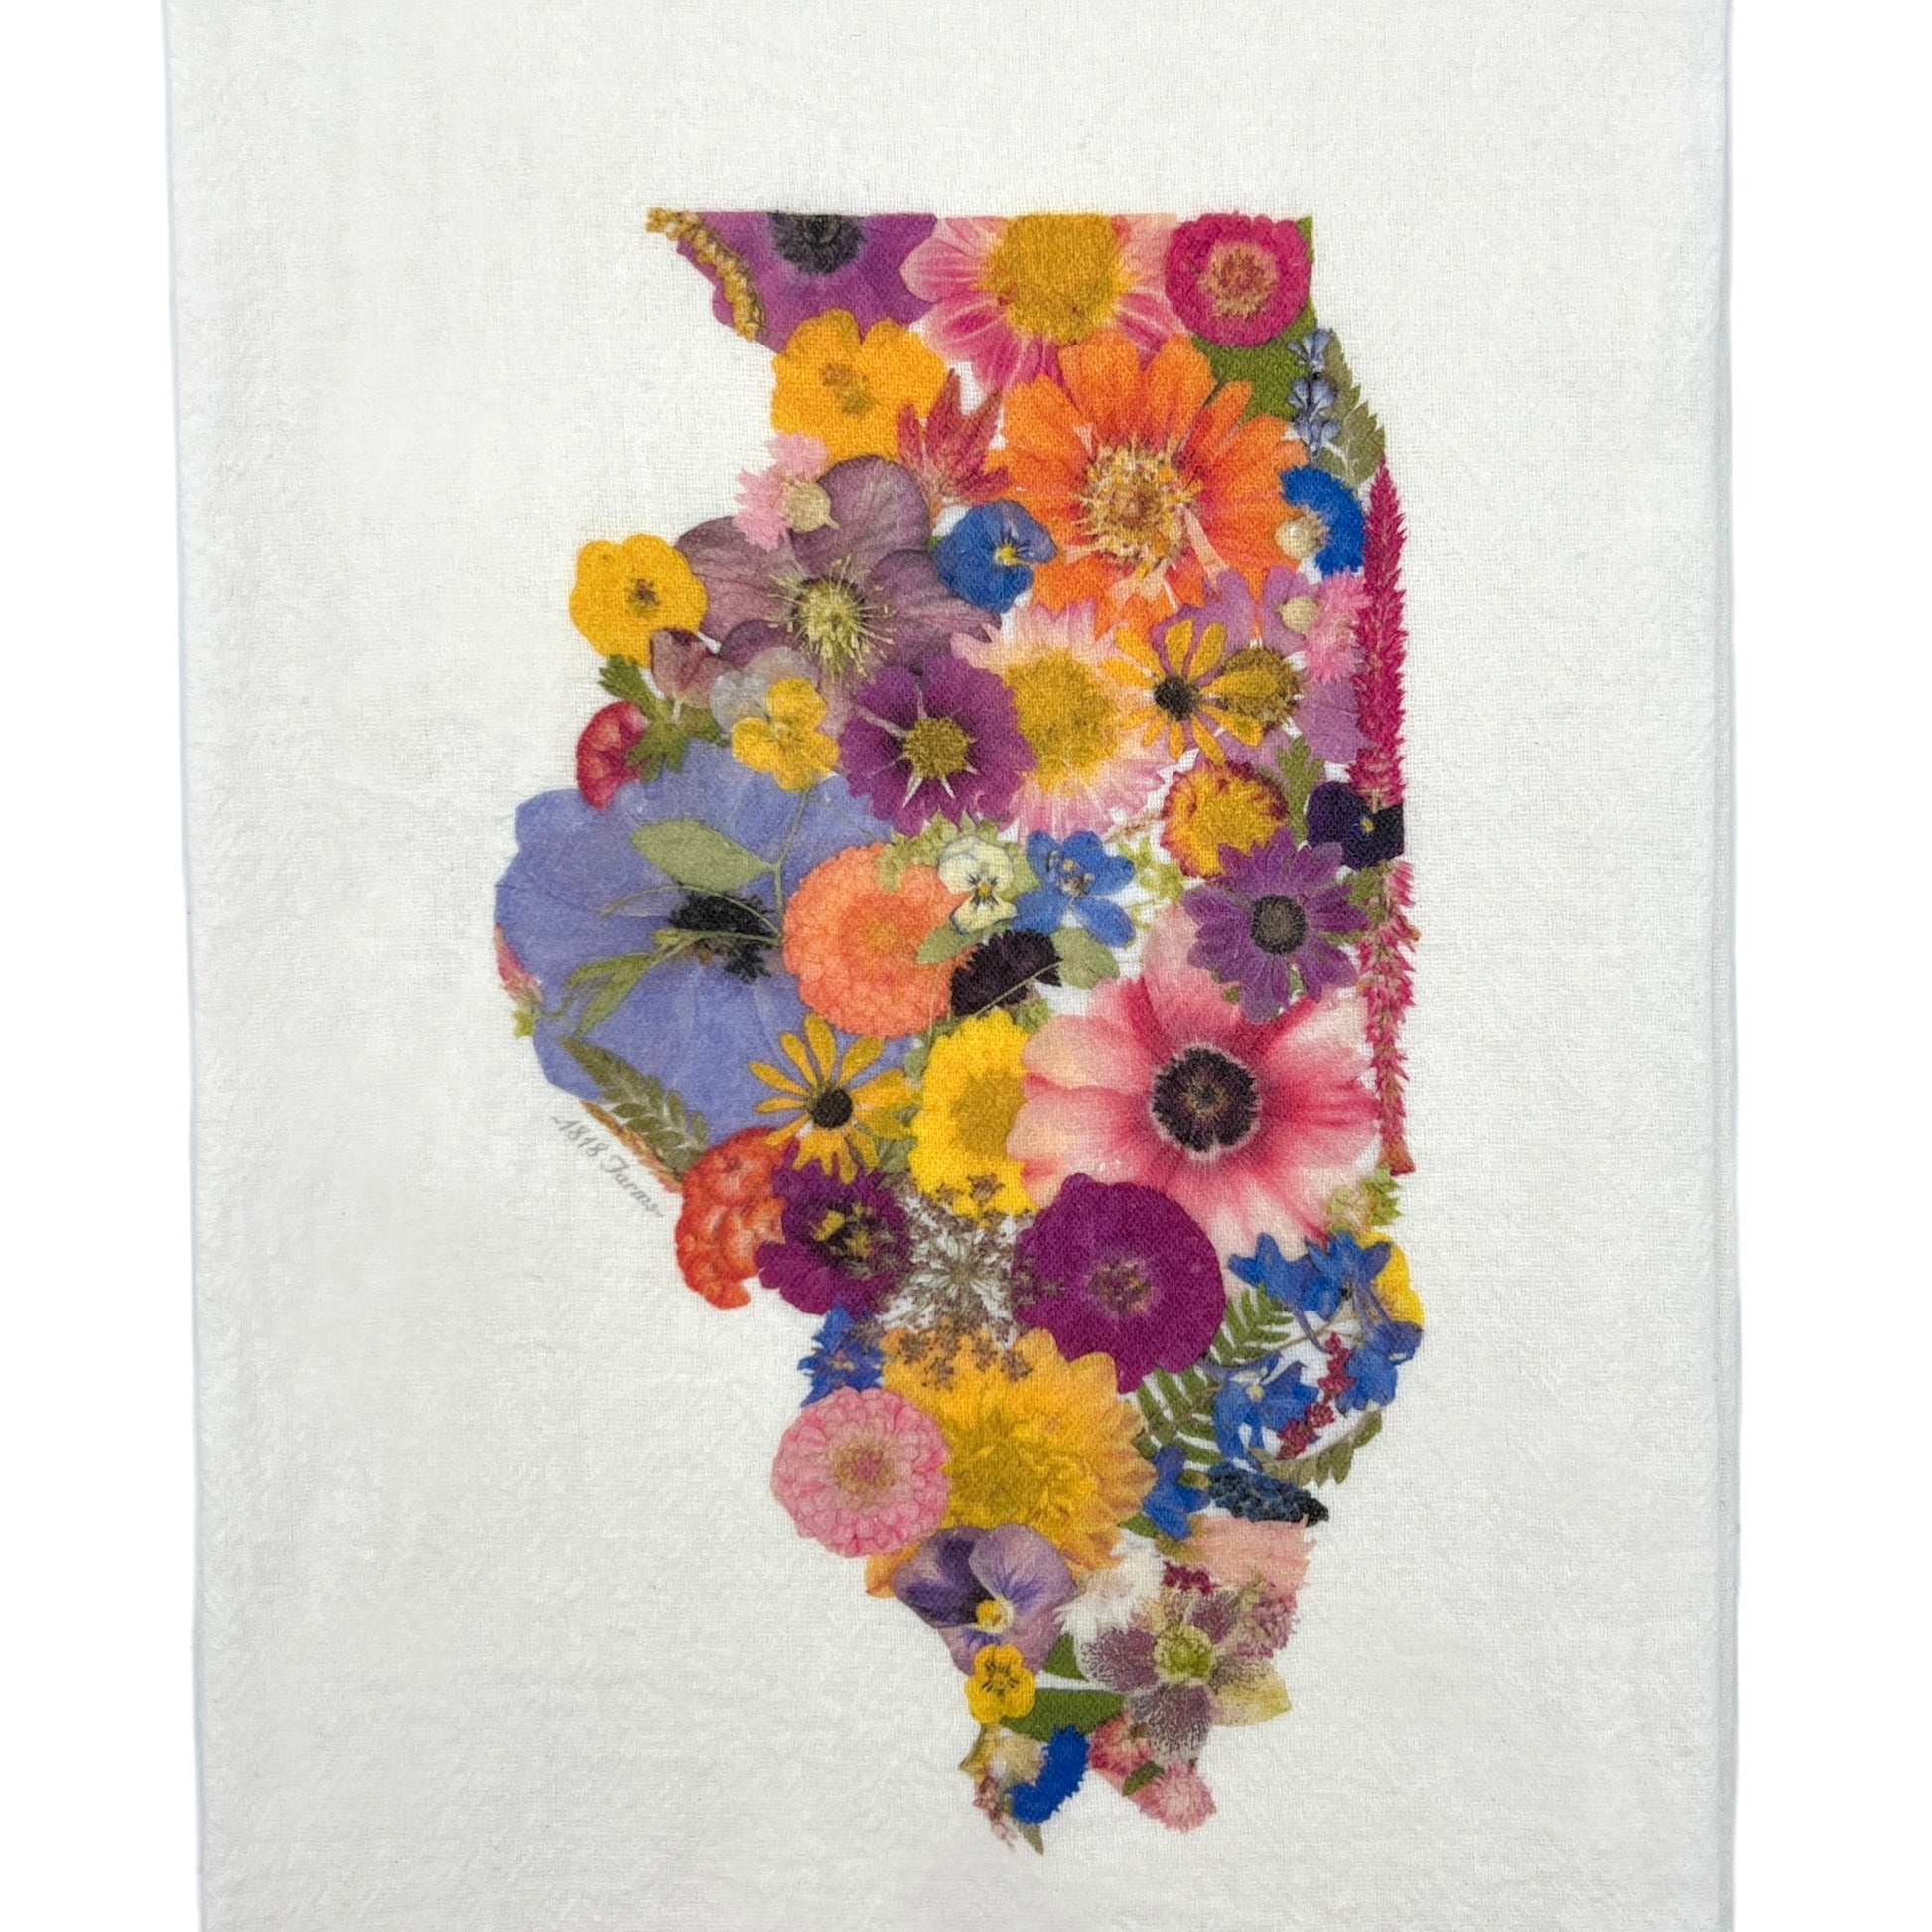 Illinois Themed Flour Sack Towel  - "Where I Bloom" Collection Towel 1818 Farms   